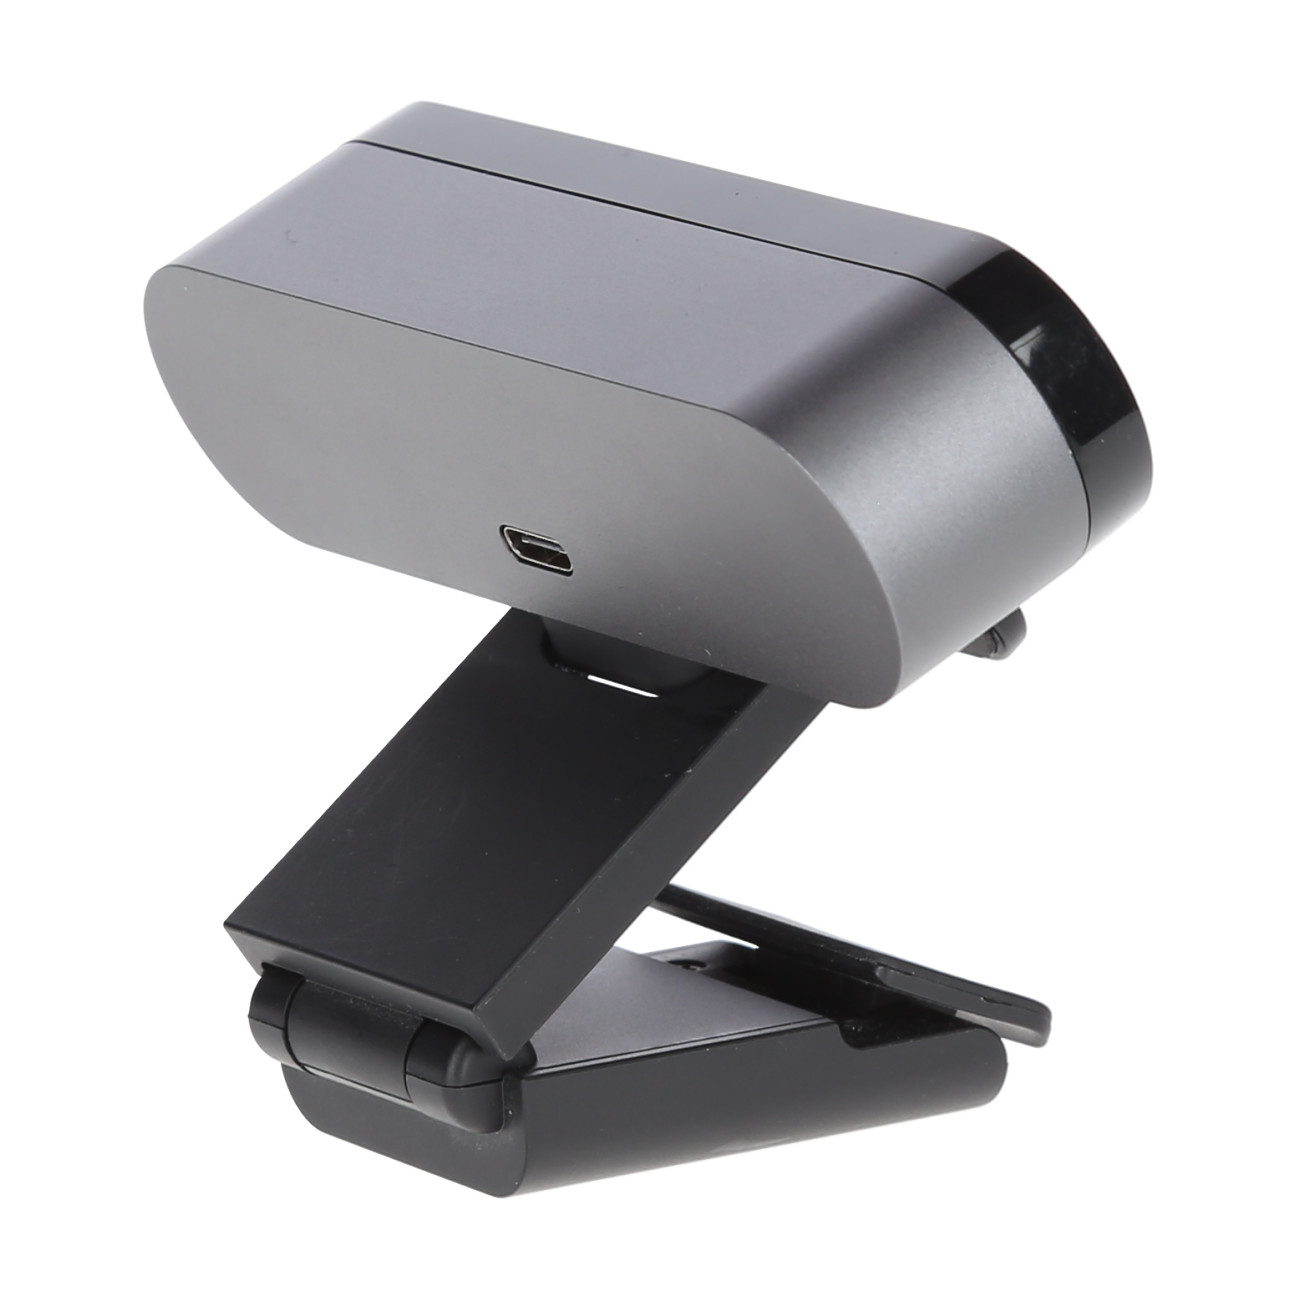 Logitech-BRIO-4K-Webcam-16MP-30fps-90-FOV-5x-Zoom